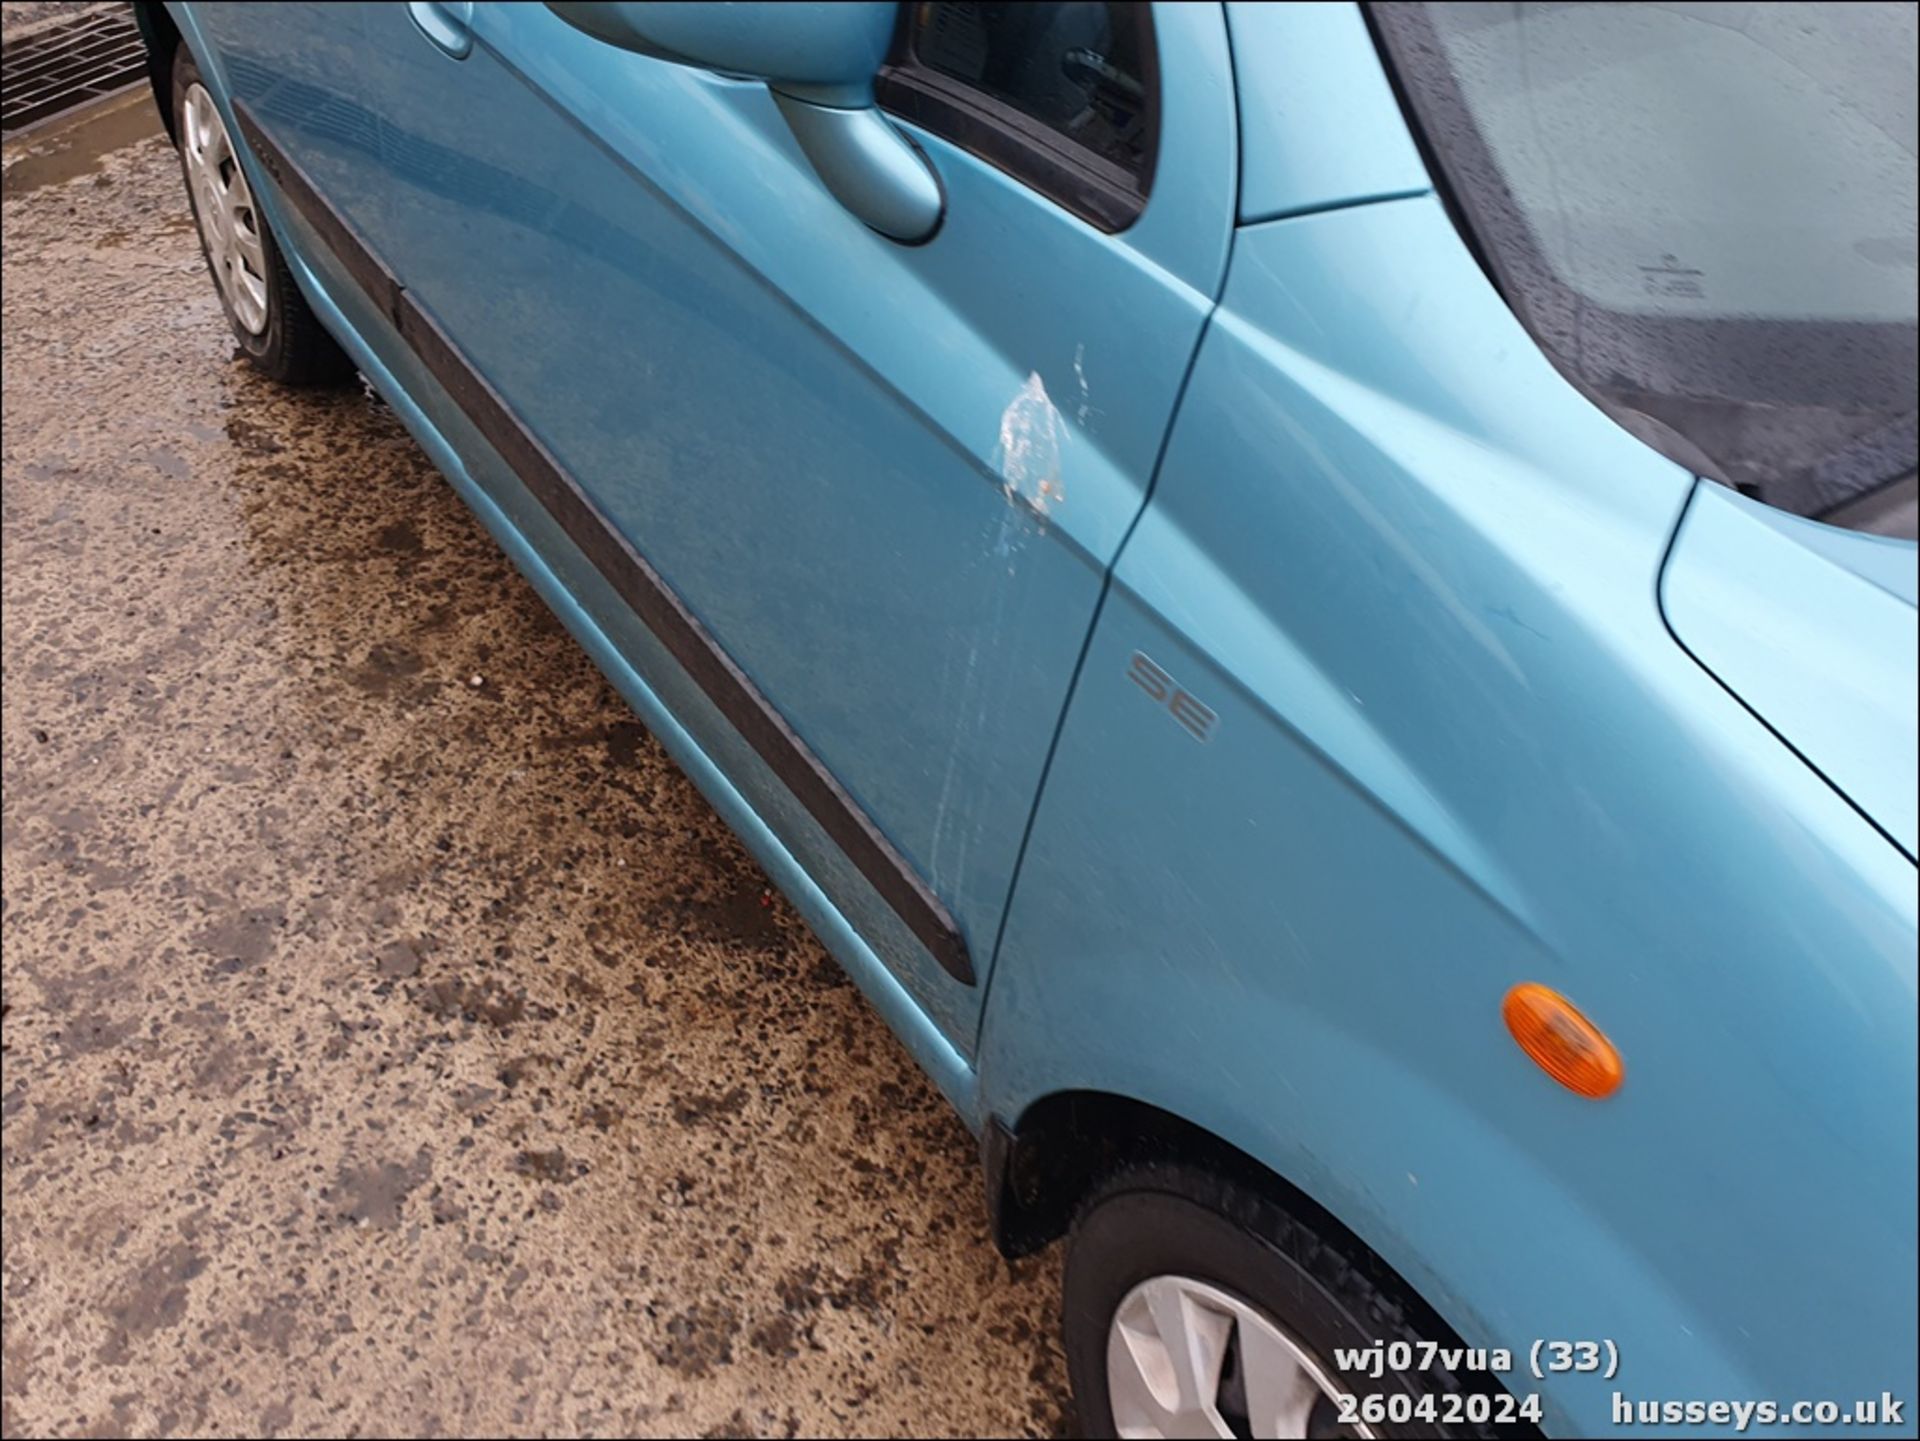 07/07 CHEVROLET MATIZ SE AUTO - 796cc 5dr Hatchback (Blue, 36k) - Image 34 of 56